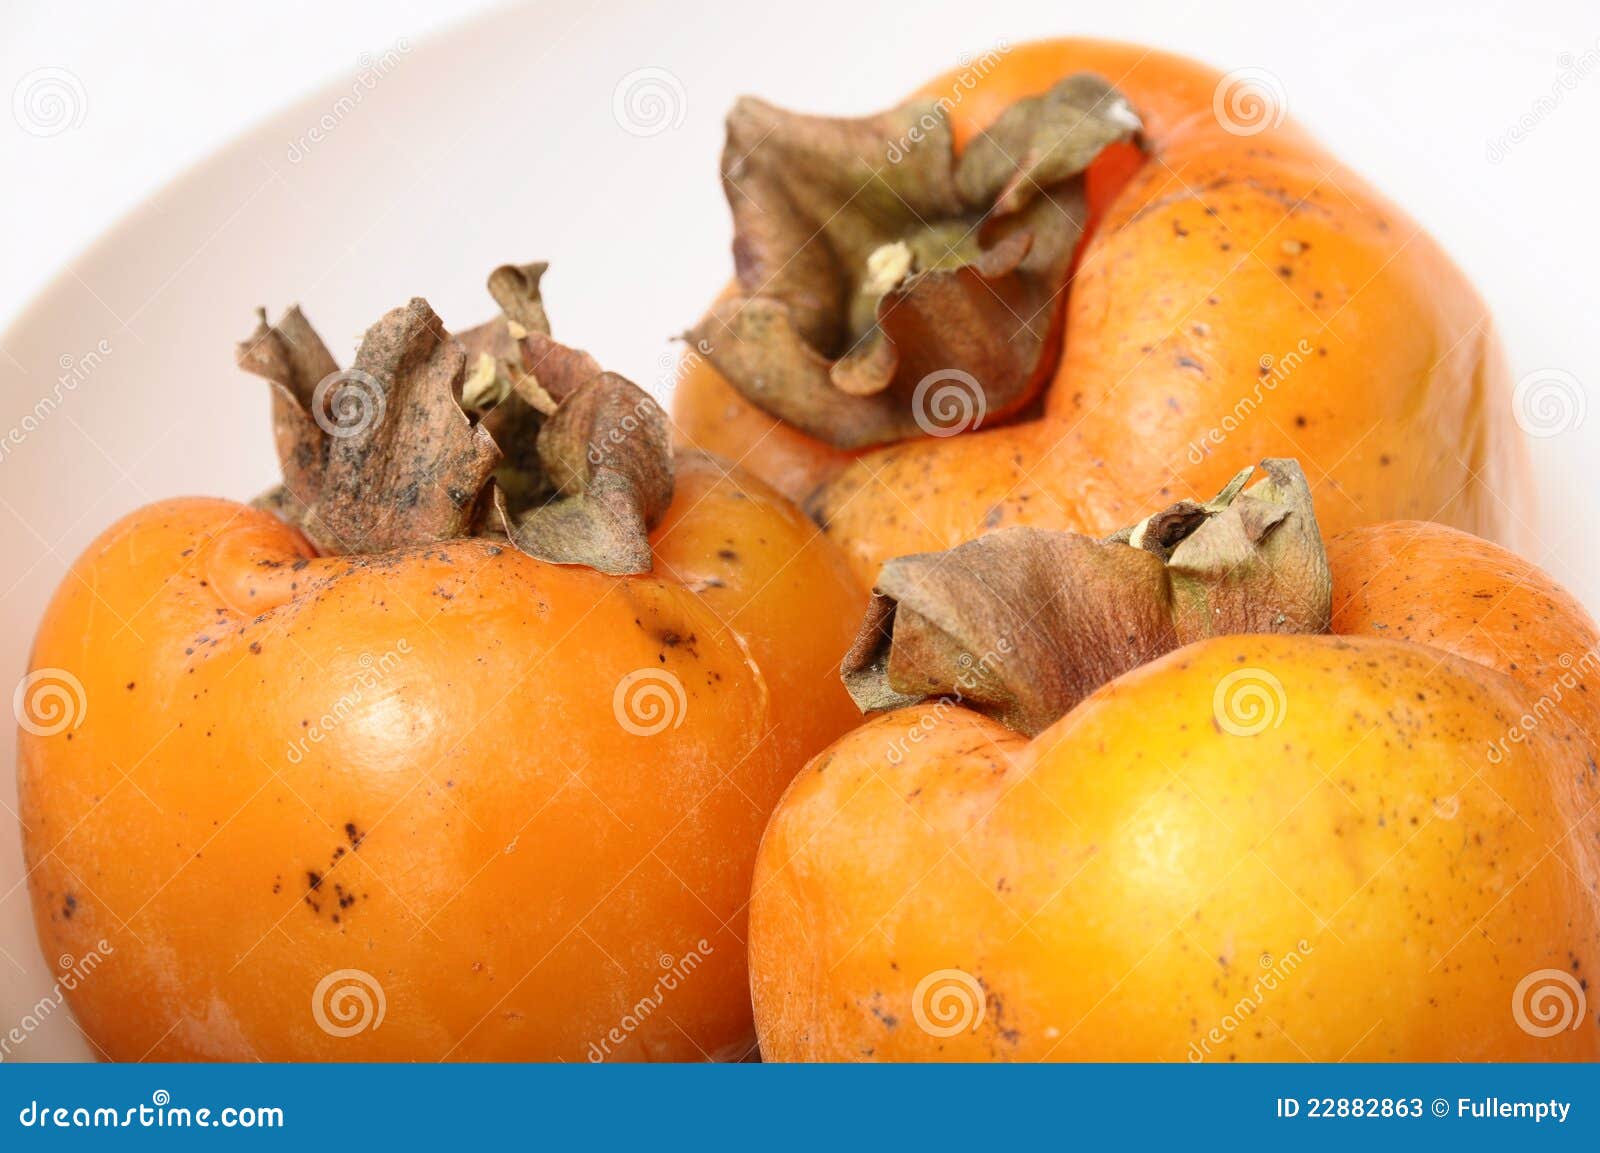 three kaki exotic fruit stock photos - image: 22882863